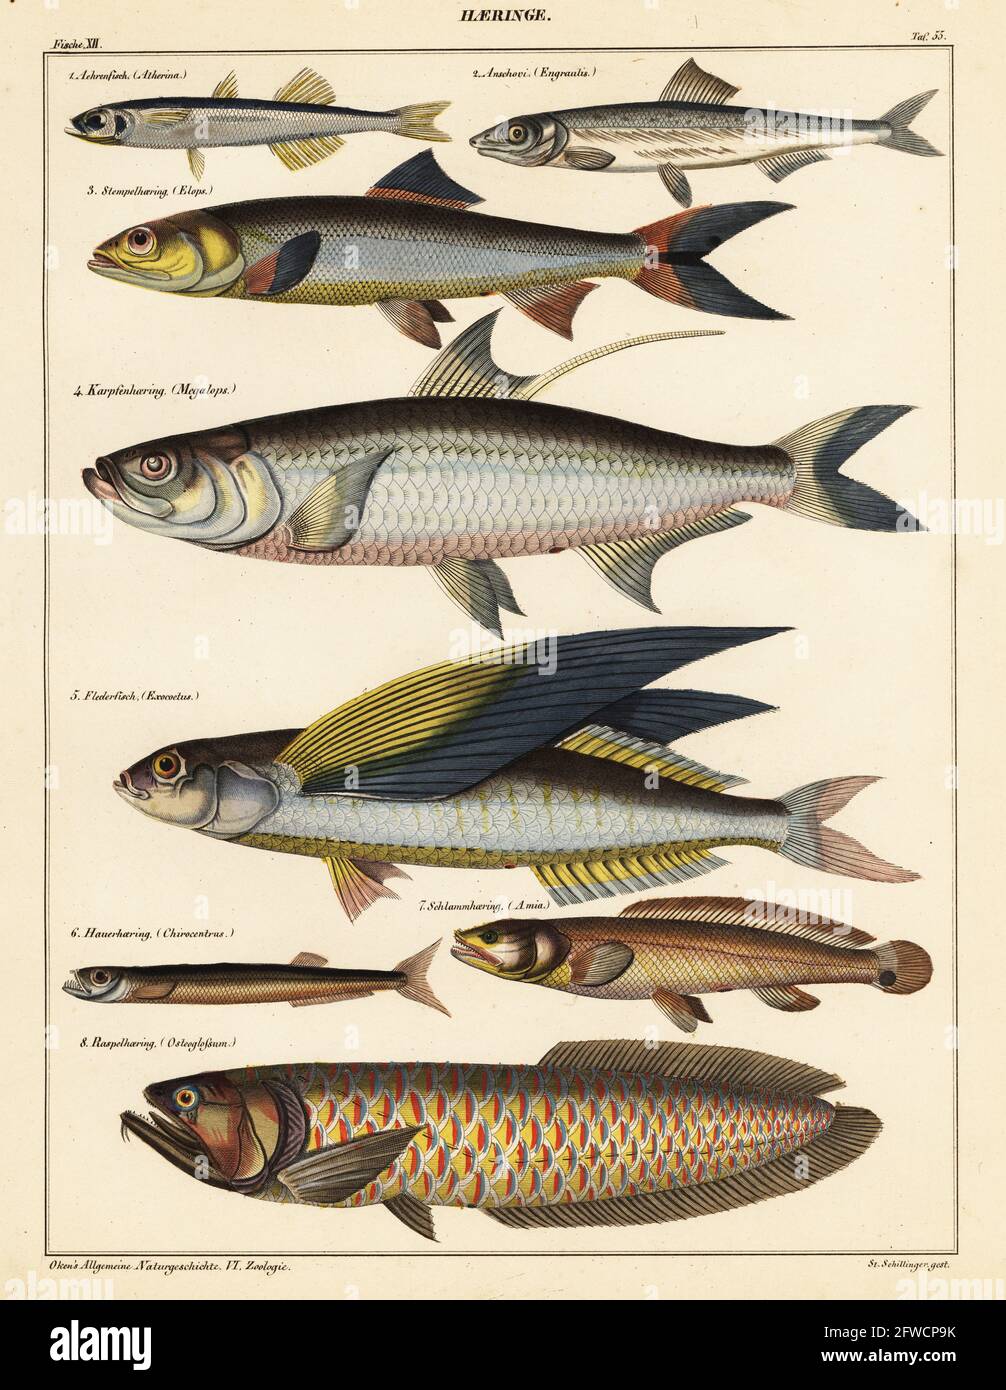 Espèces de poissons : 1 éperlan de sable, Achrenfisch (Atherina), 2 anchois, Anschovi (Engraulis), 3 ladyfish, Stempelhaering (Elops), 4 tarpon, Karpfenhaering (megalops), 5 poissons volants, Flederfisch (Exocoetus), 6 hareng loup, Hauerhaering (Chirocentrus), 7 nain, Schlammhaering (Amia) et 8 arowana, Raspelhaering (Osteoglossum). Tôle 55. Lithographie de couleur main de St Schilinger de l'Histoire naturelle universelle de Lorenz Oken, Allgemeine Naturgeschichte fur alle Stande, Stuttgart, 1841. Banque D'Images